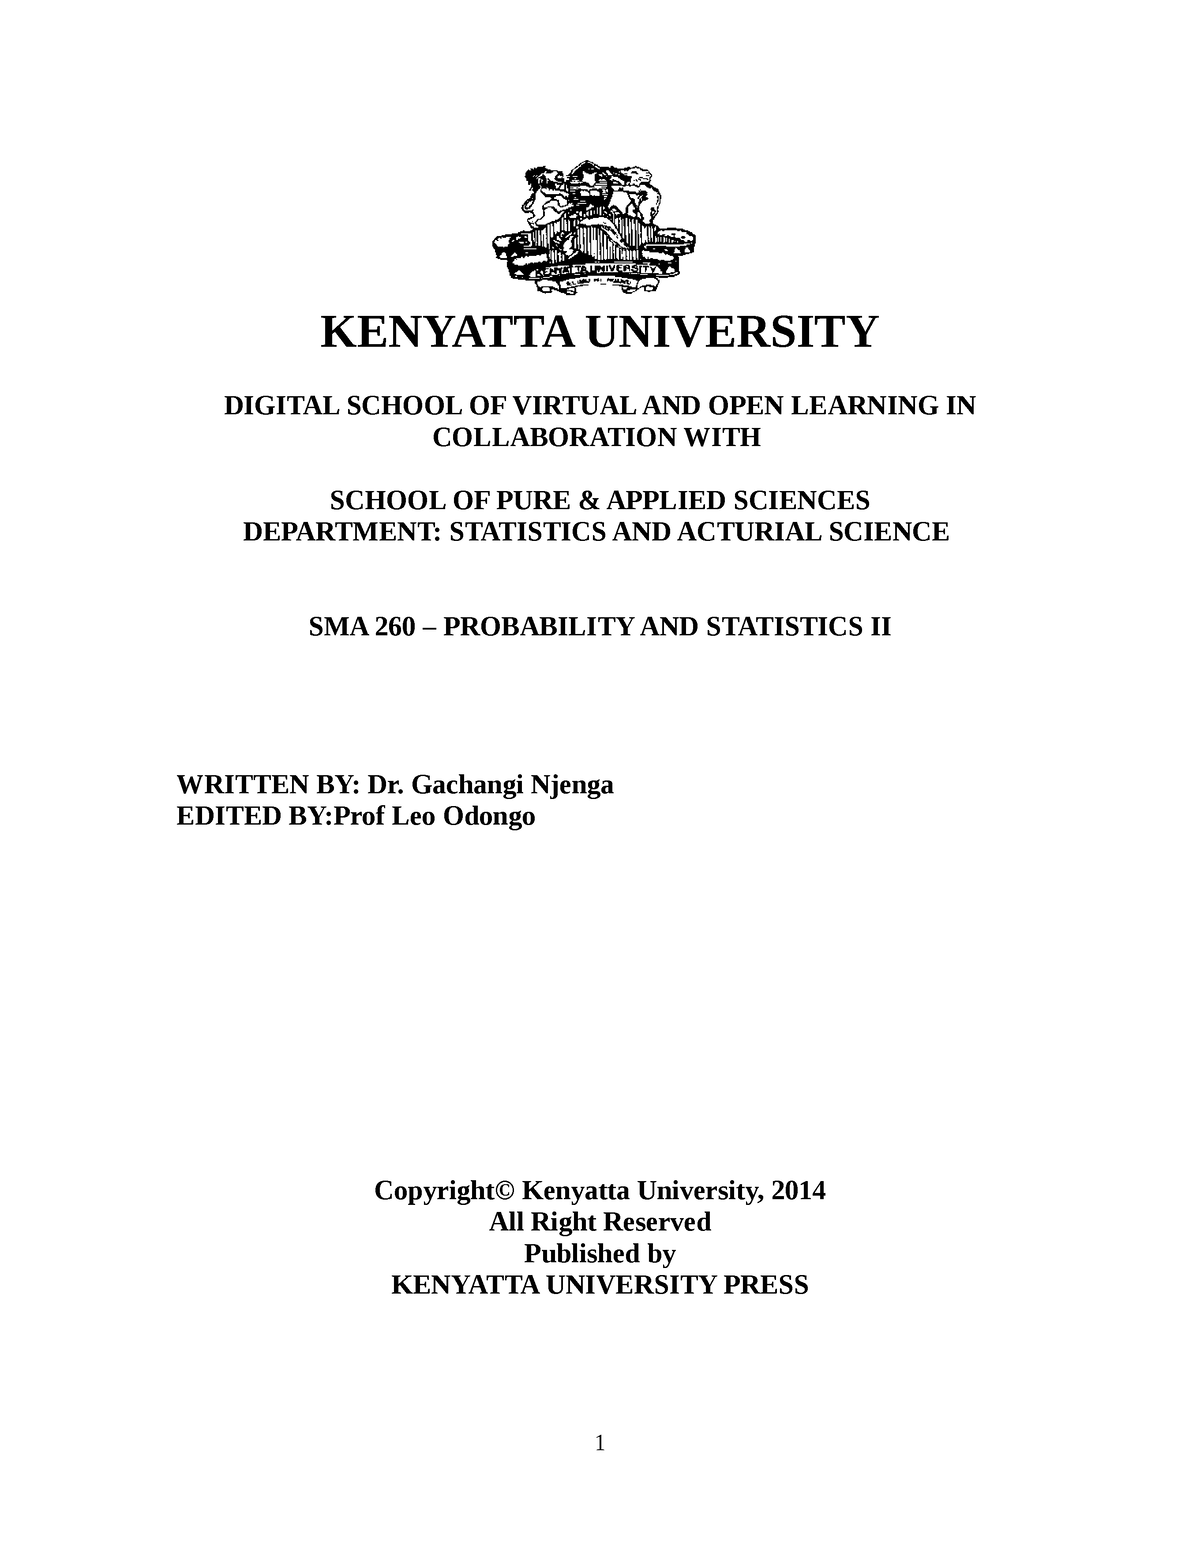 kenyatta university thesis and dissertation